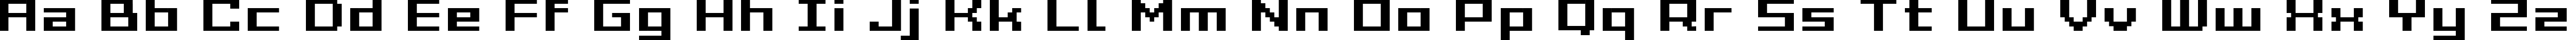 Пример написания английского алфавита шрифтом Grixel Acme 7 Wide Bold Xtnd